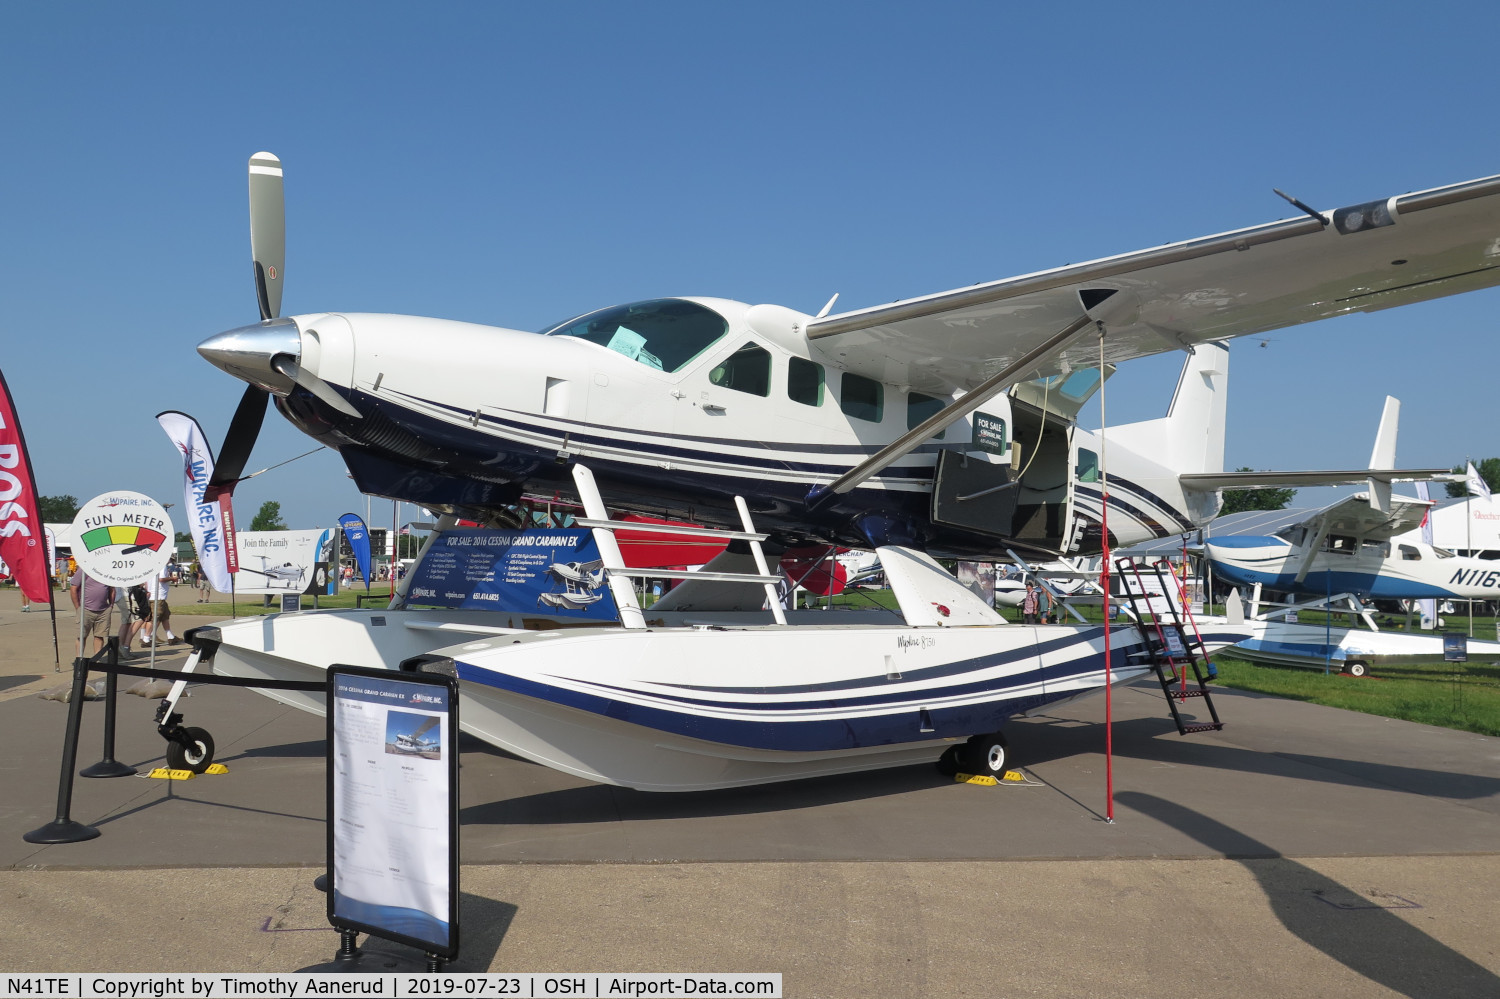 N41TE, 2016 Cessna 208B Grand Caravan EX C/N 208B5268, 2016 TEXTRON AVIATION INC 208B, c/n: 208B5268
Wipline Floats